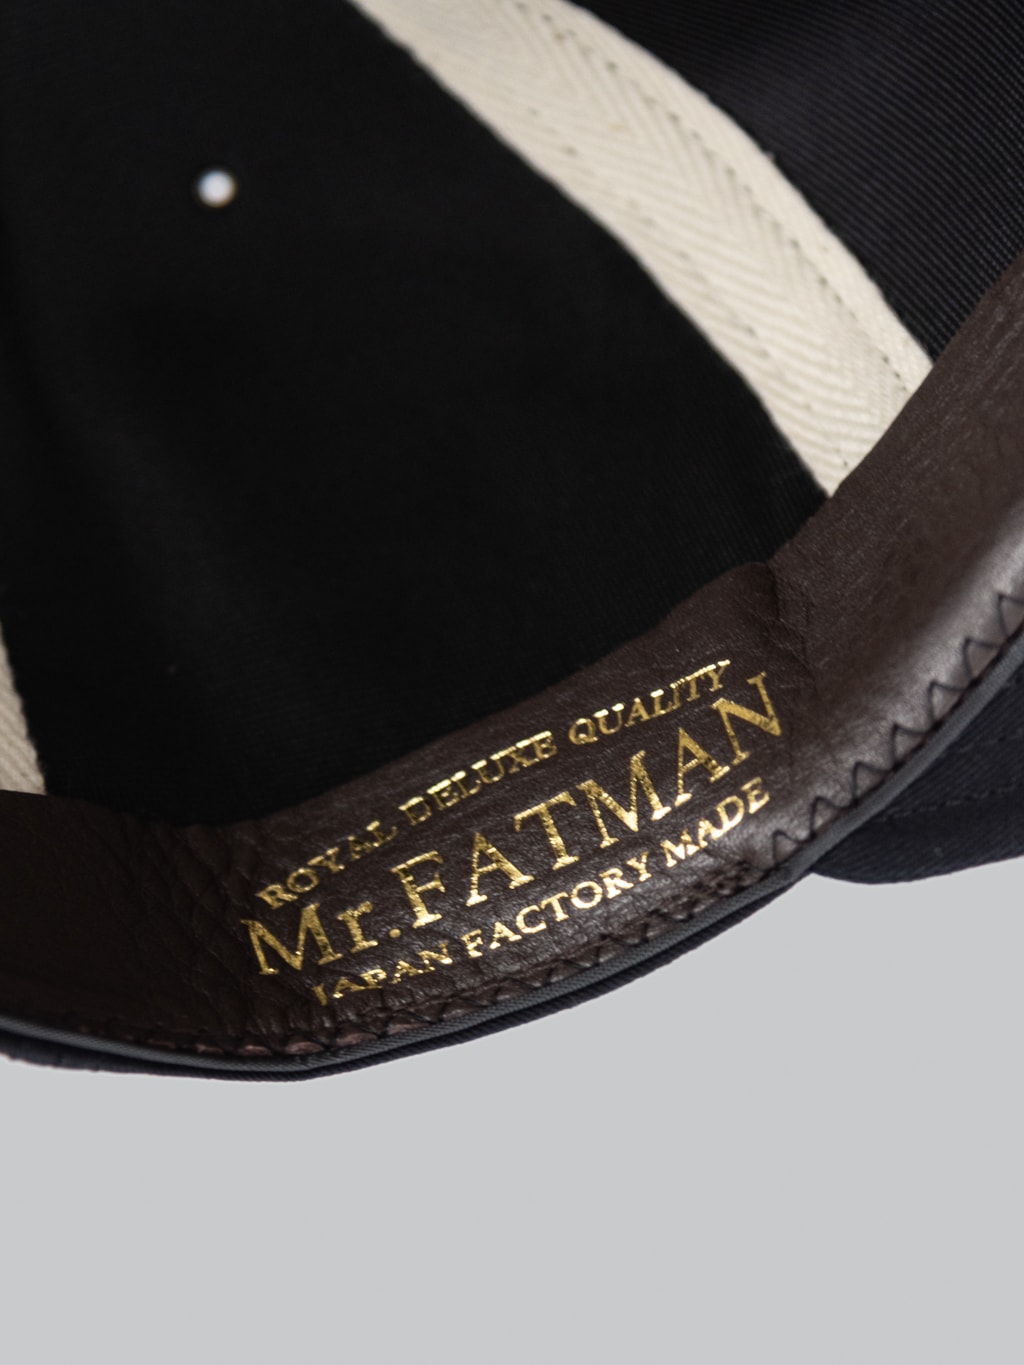 Mr Fatman Classic BB Cap Black leather sweatband